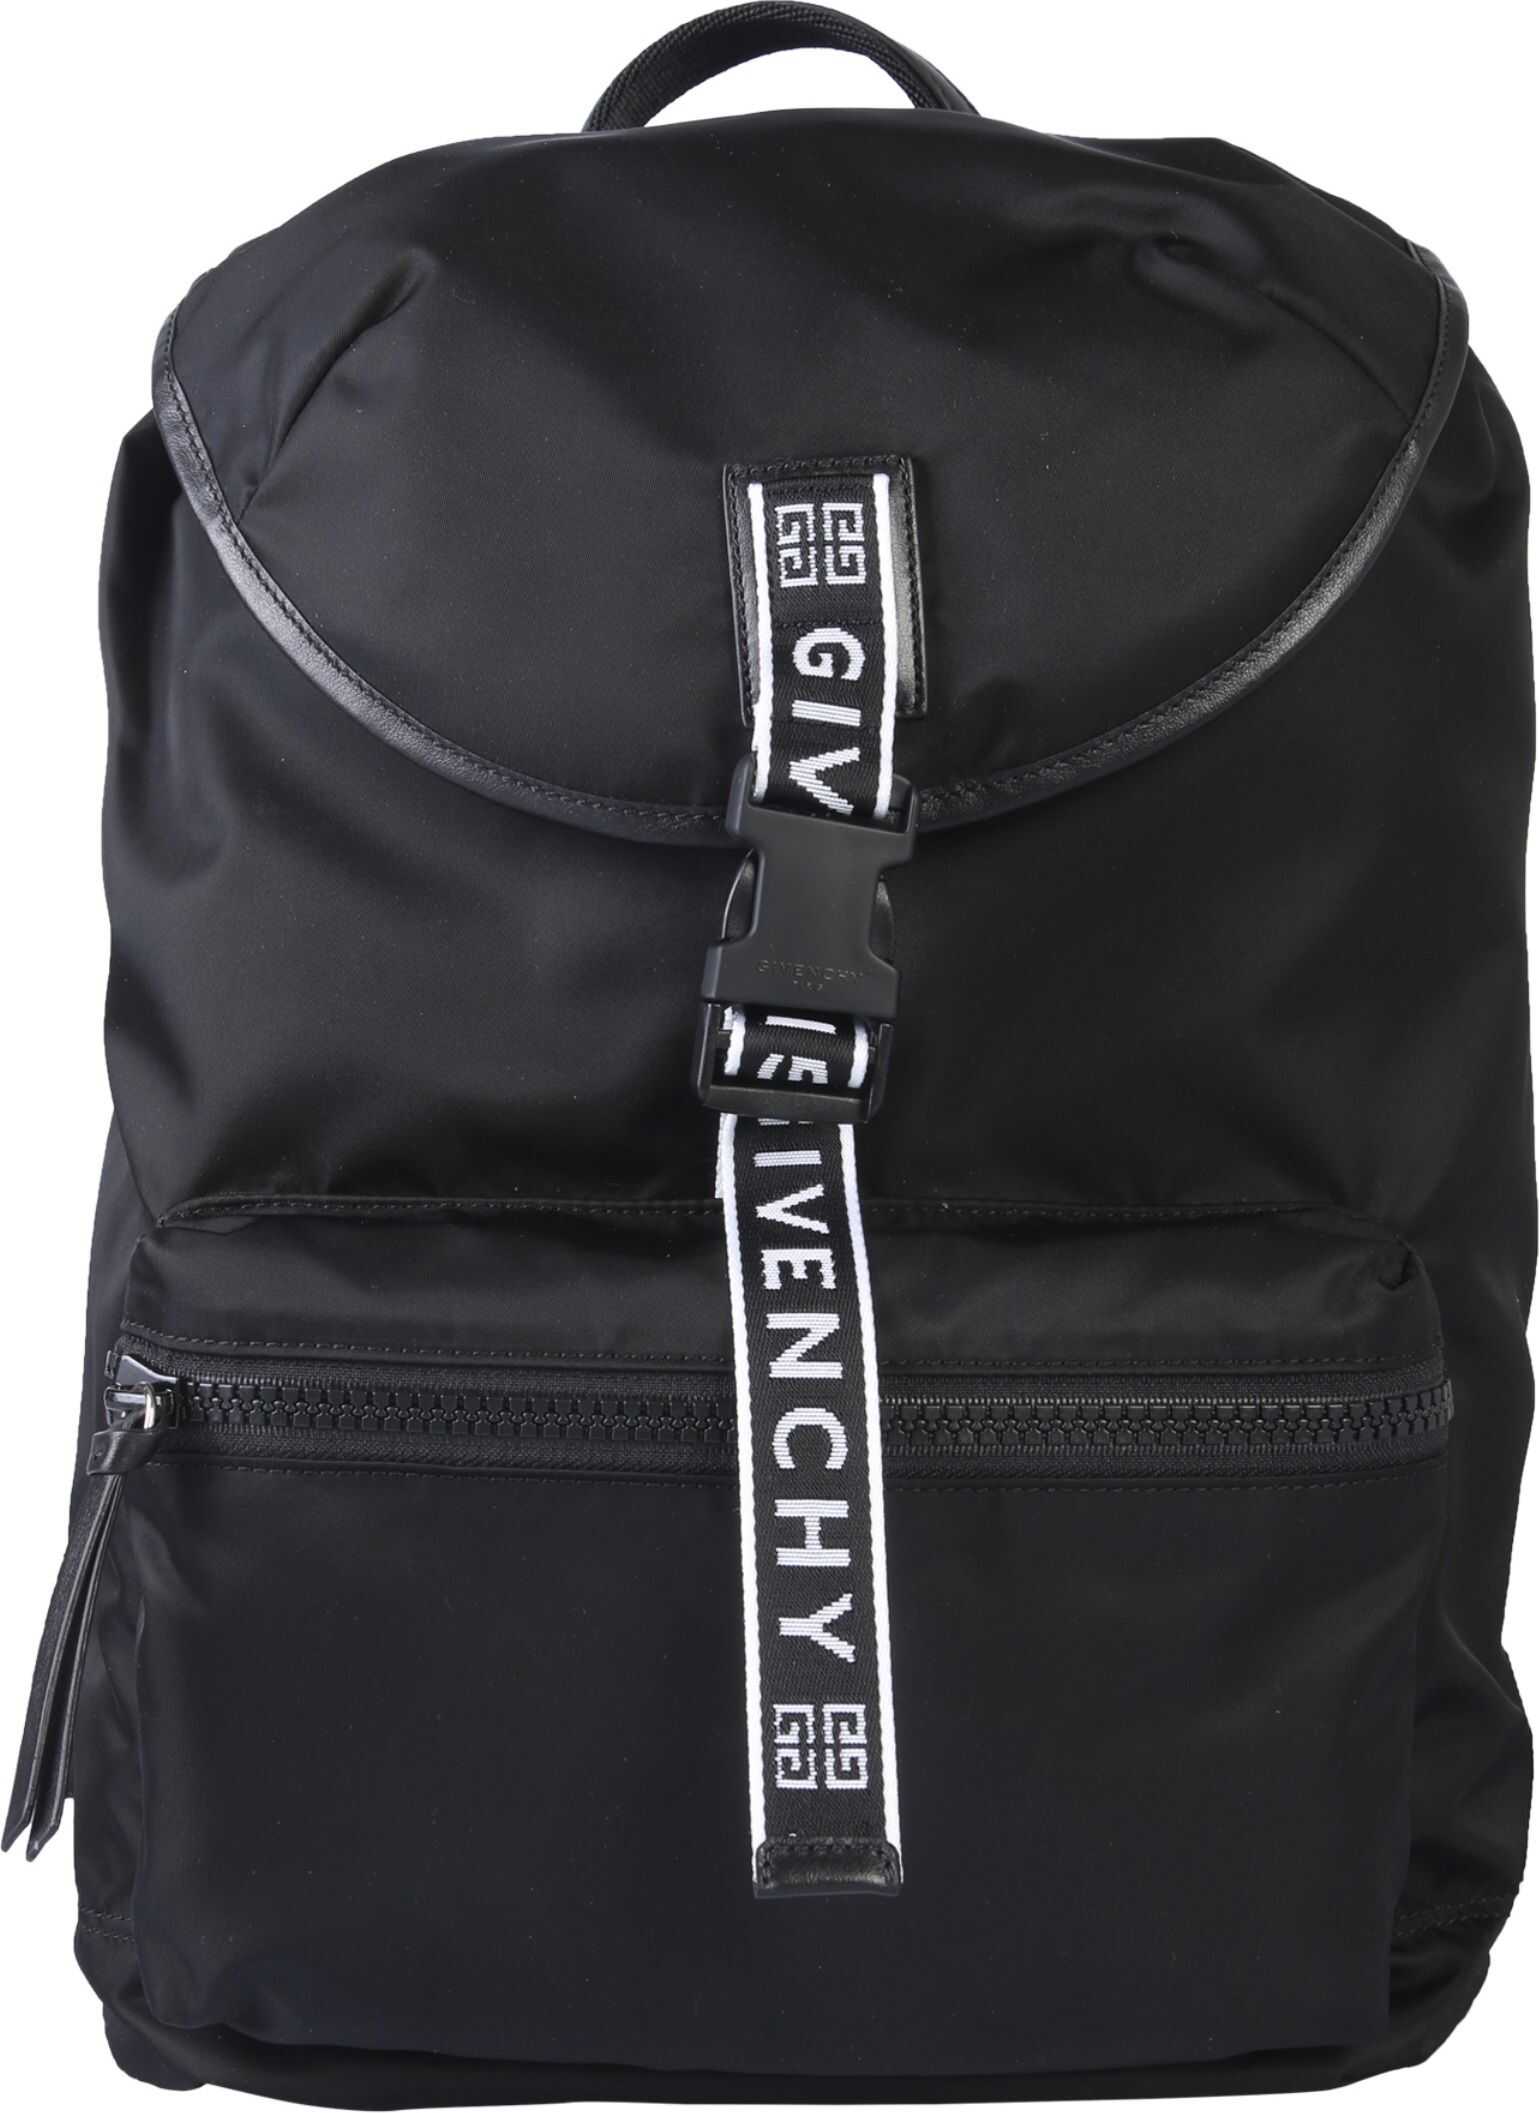 Givenchy Foldable Backpack BLACK